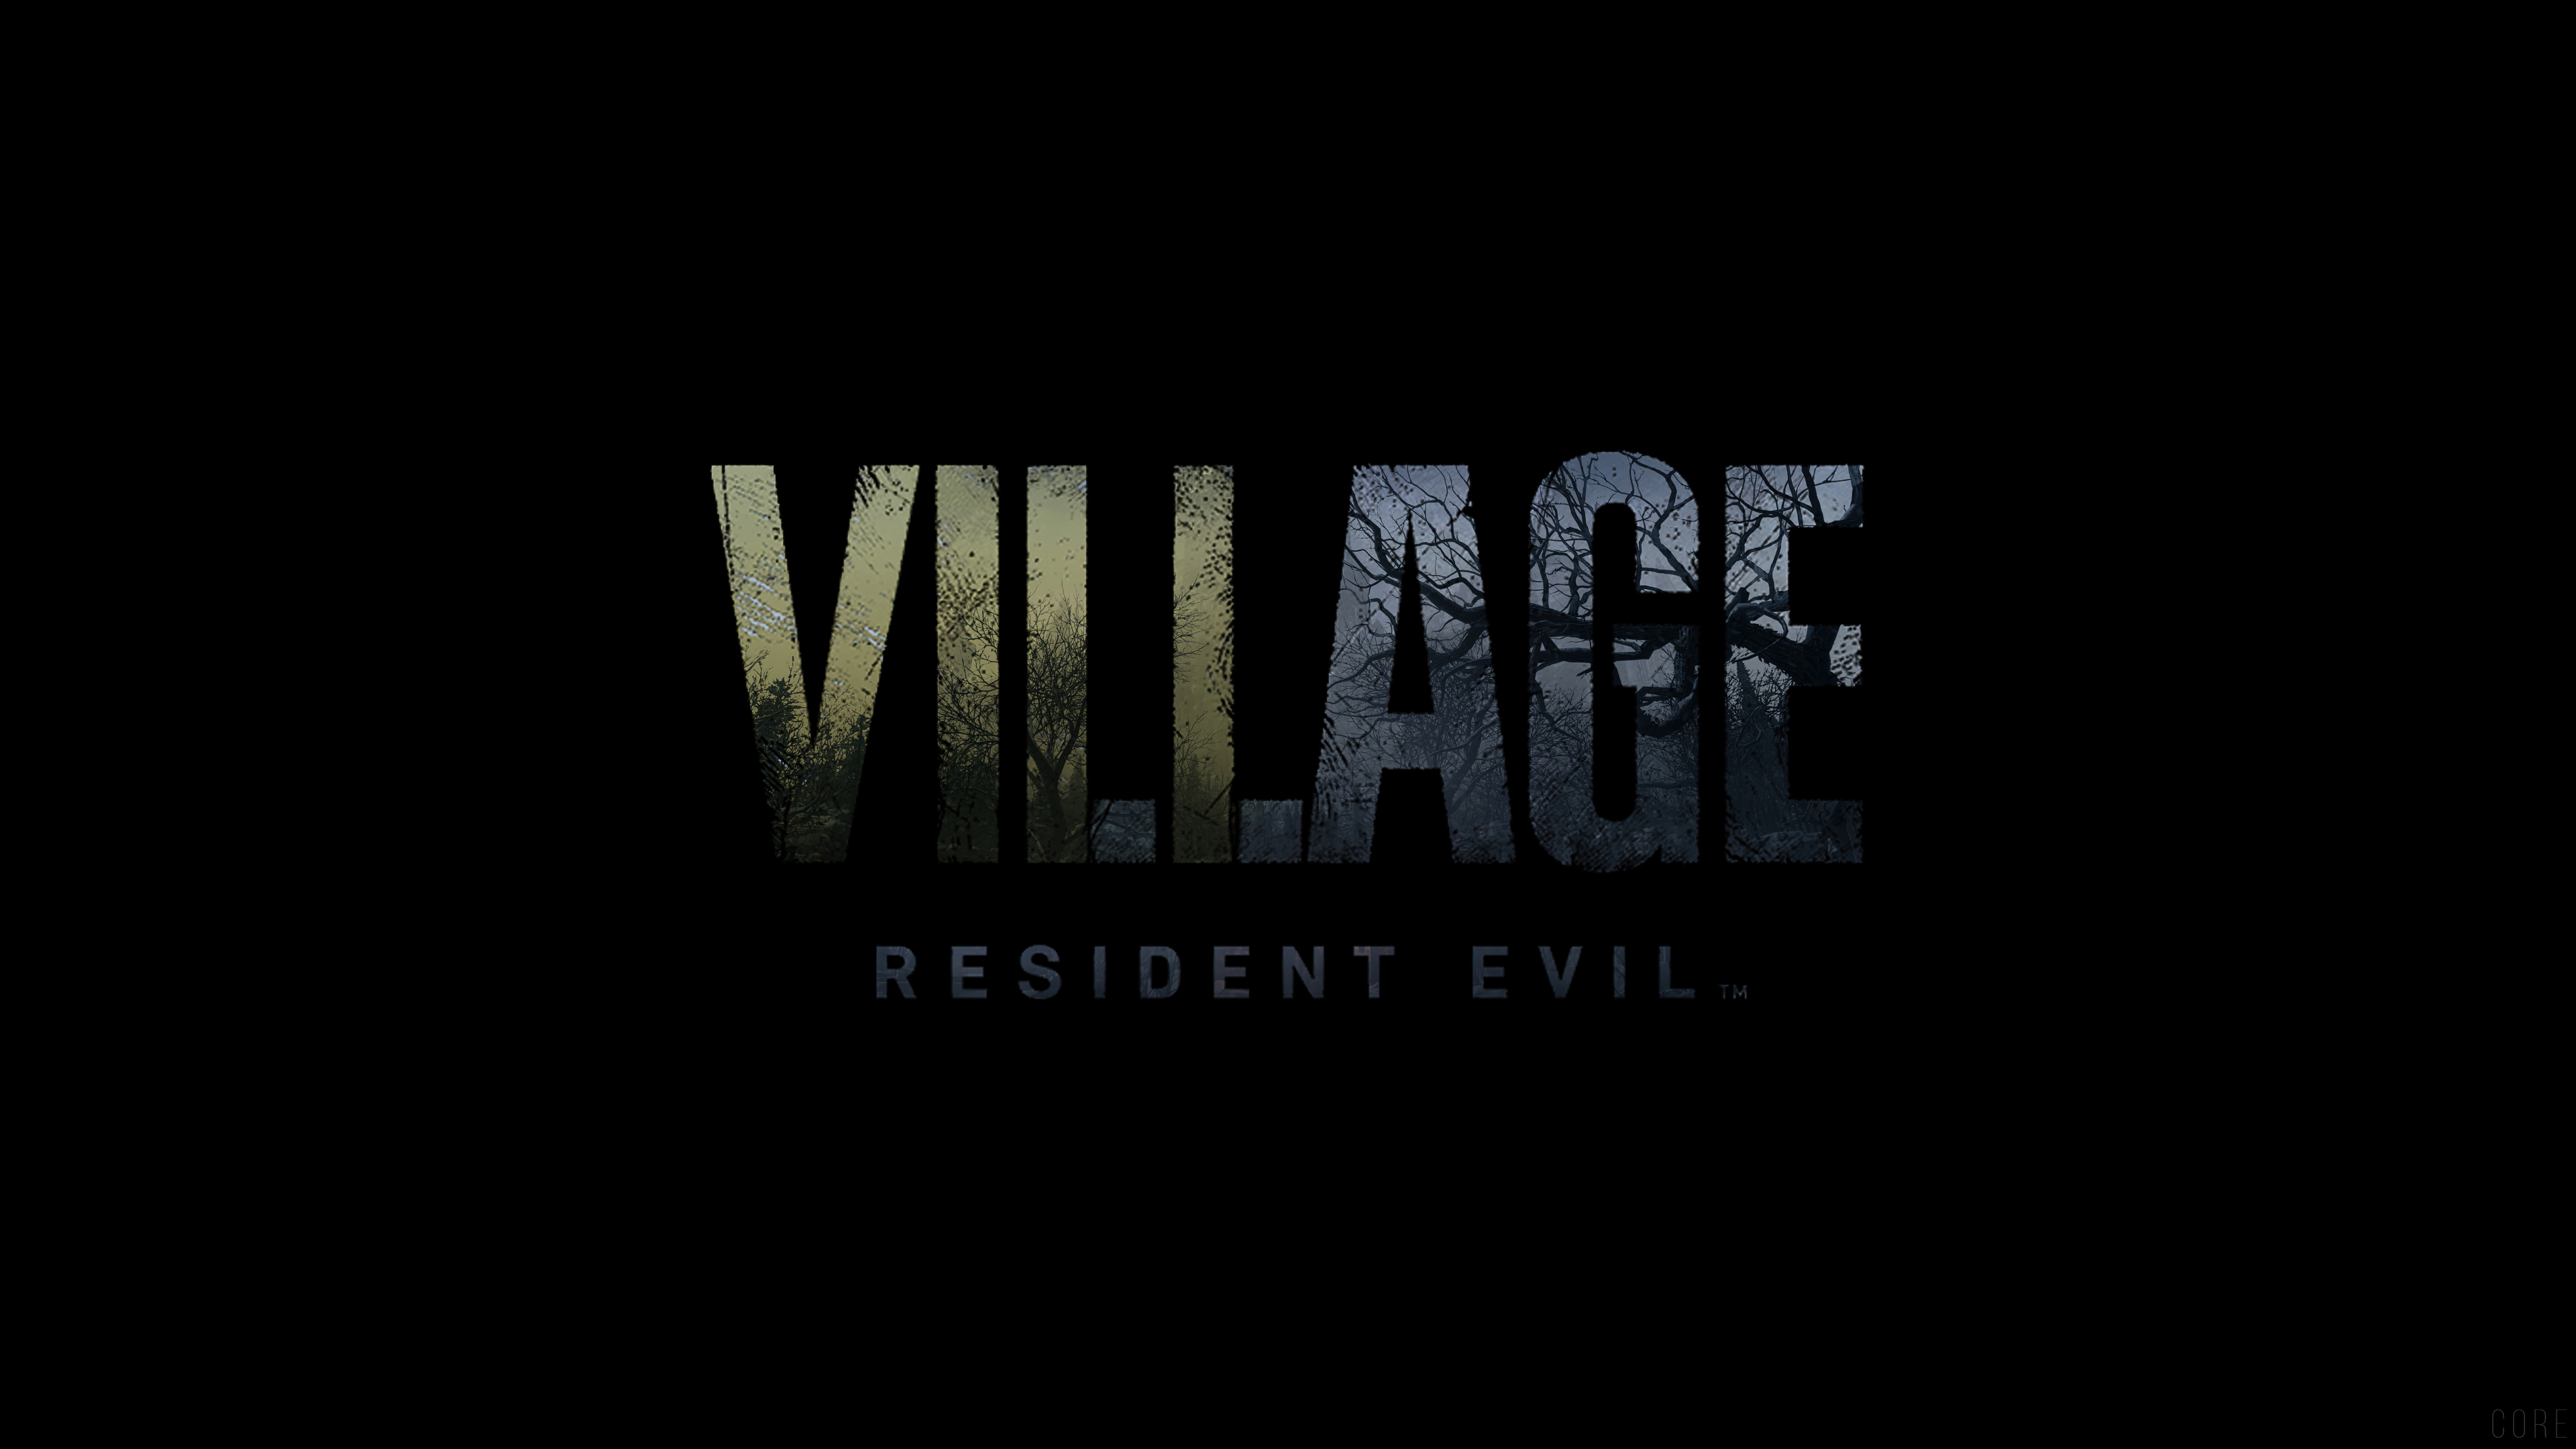 Resident Evil Resident Evil Village Resident Evil 8 Village Logo Video Games Minimalism Text Texture 3840x2160